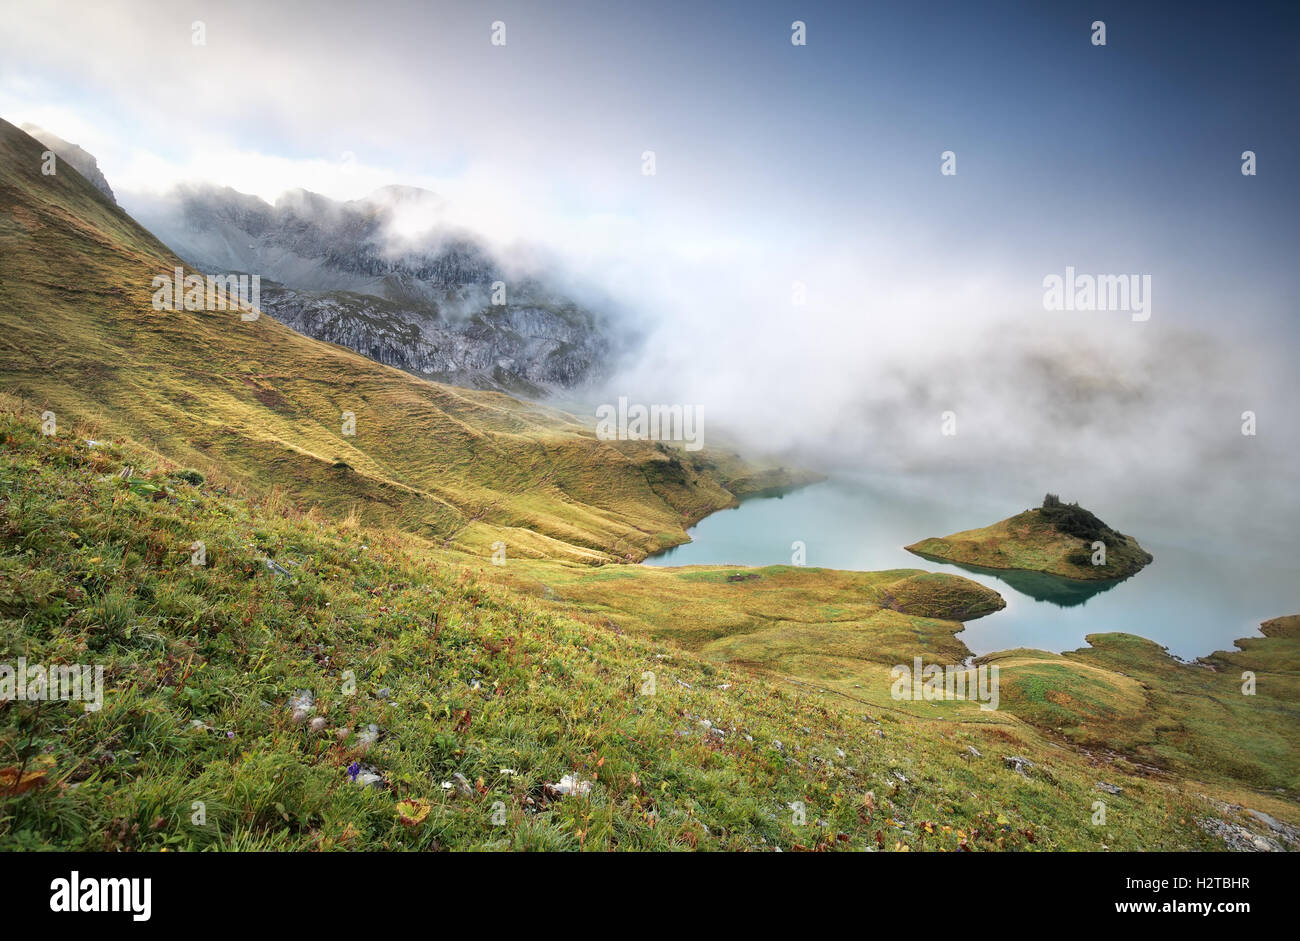 misty morning on alpine lake Schrecksee, Bavaria, Germany Stock Photo